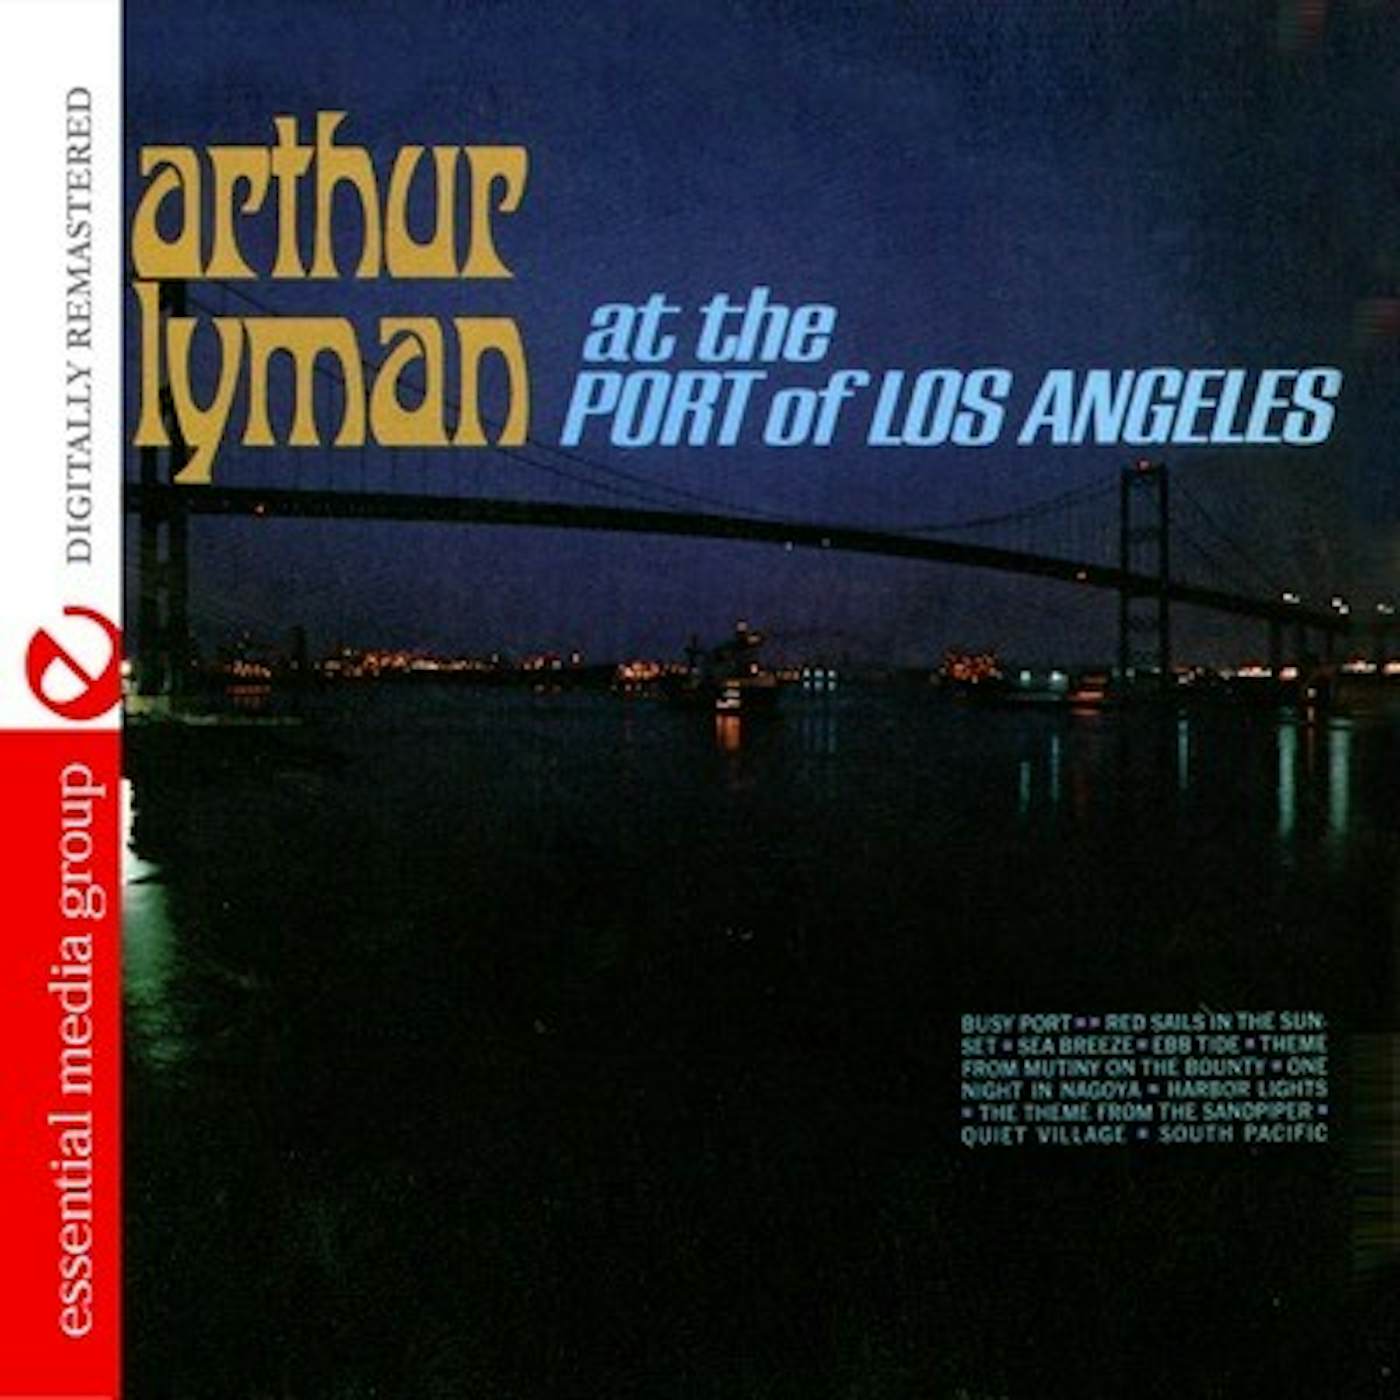 Arthur Lyman AT THE PORT OF LOS ANGELES CD